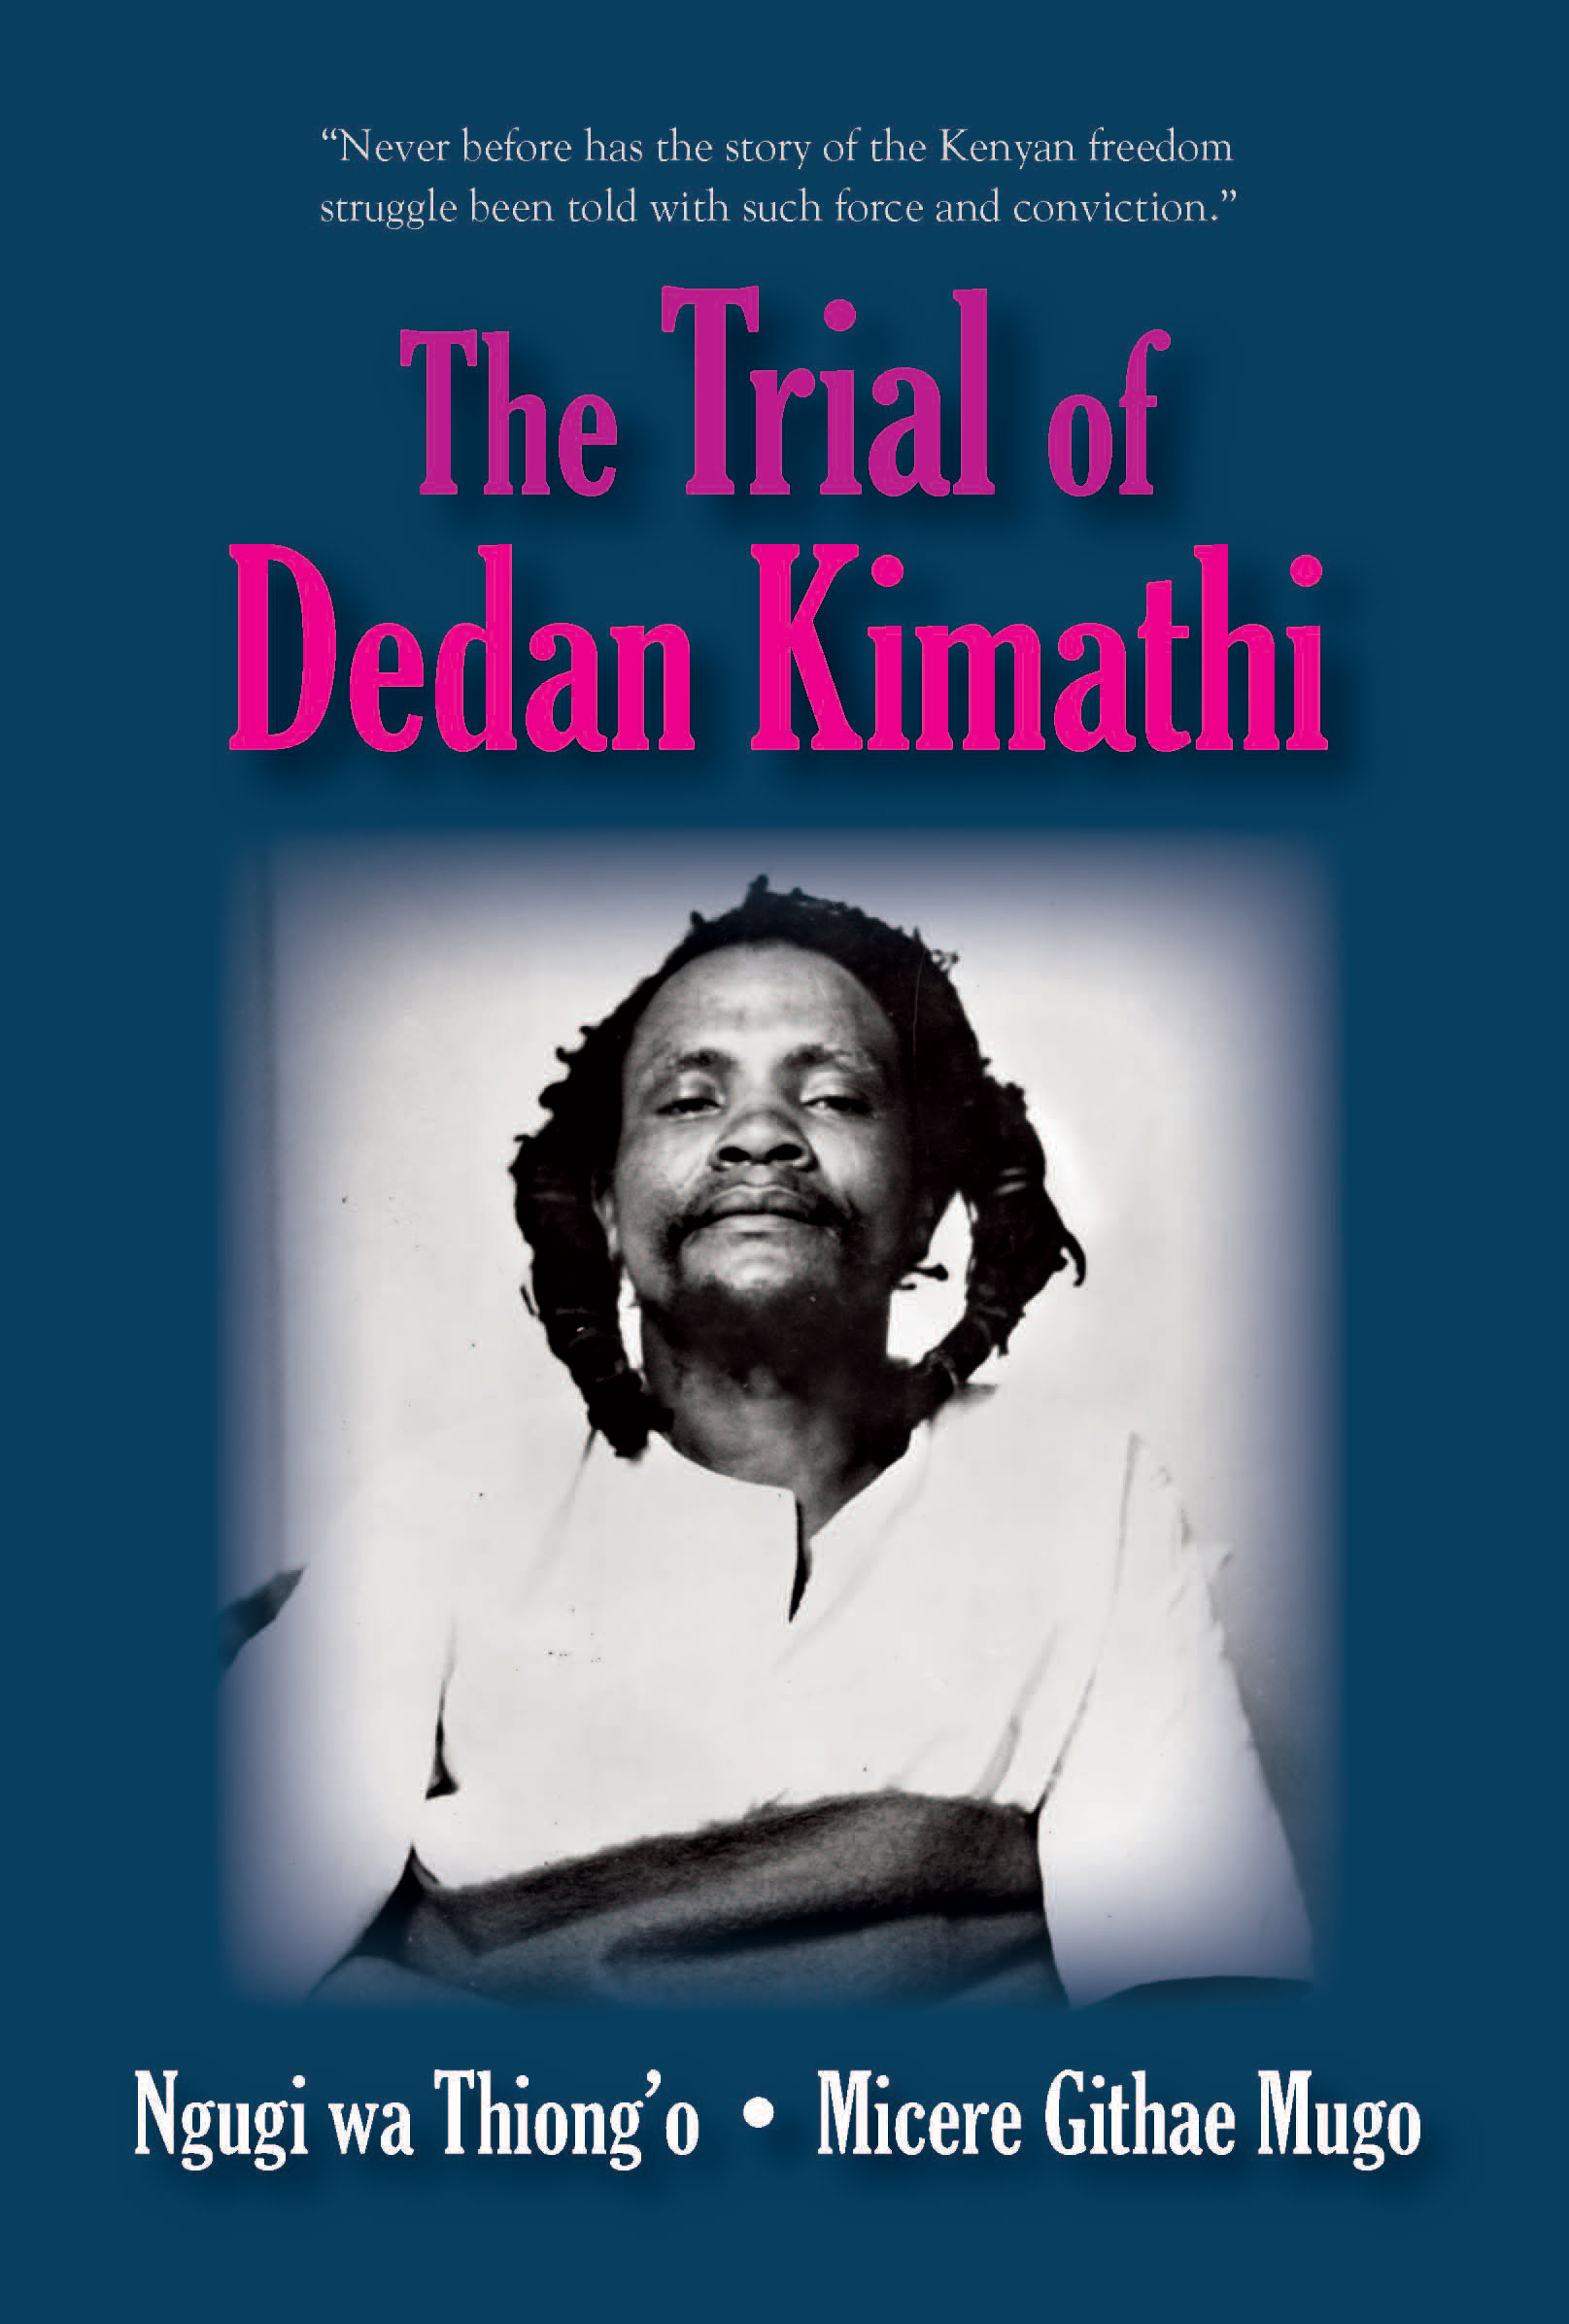 The Trial of Dedan Kimathi:  by wa Thiong